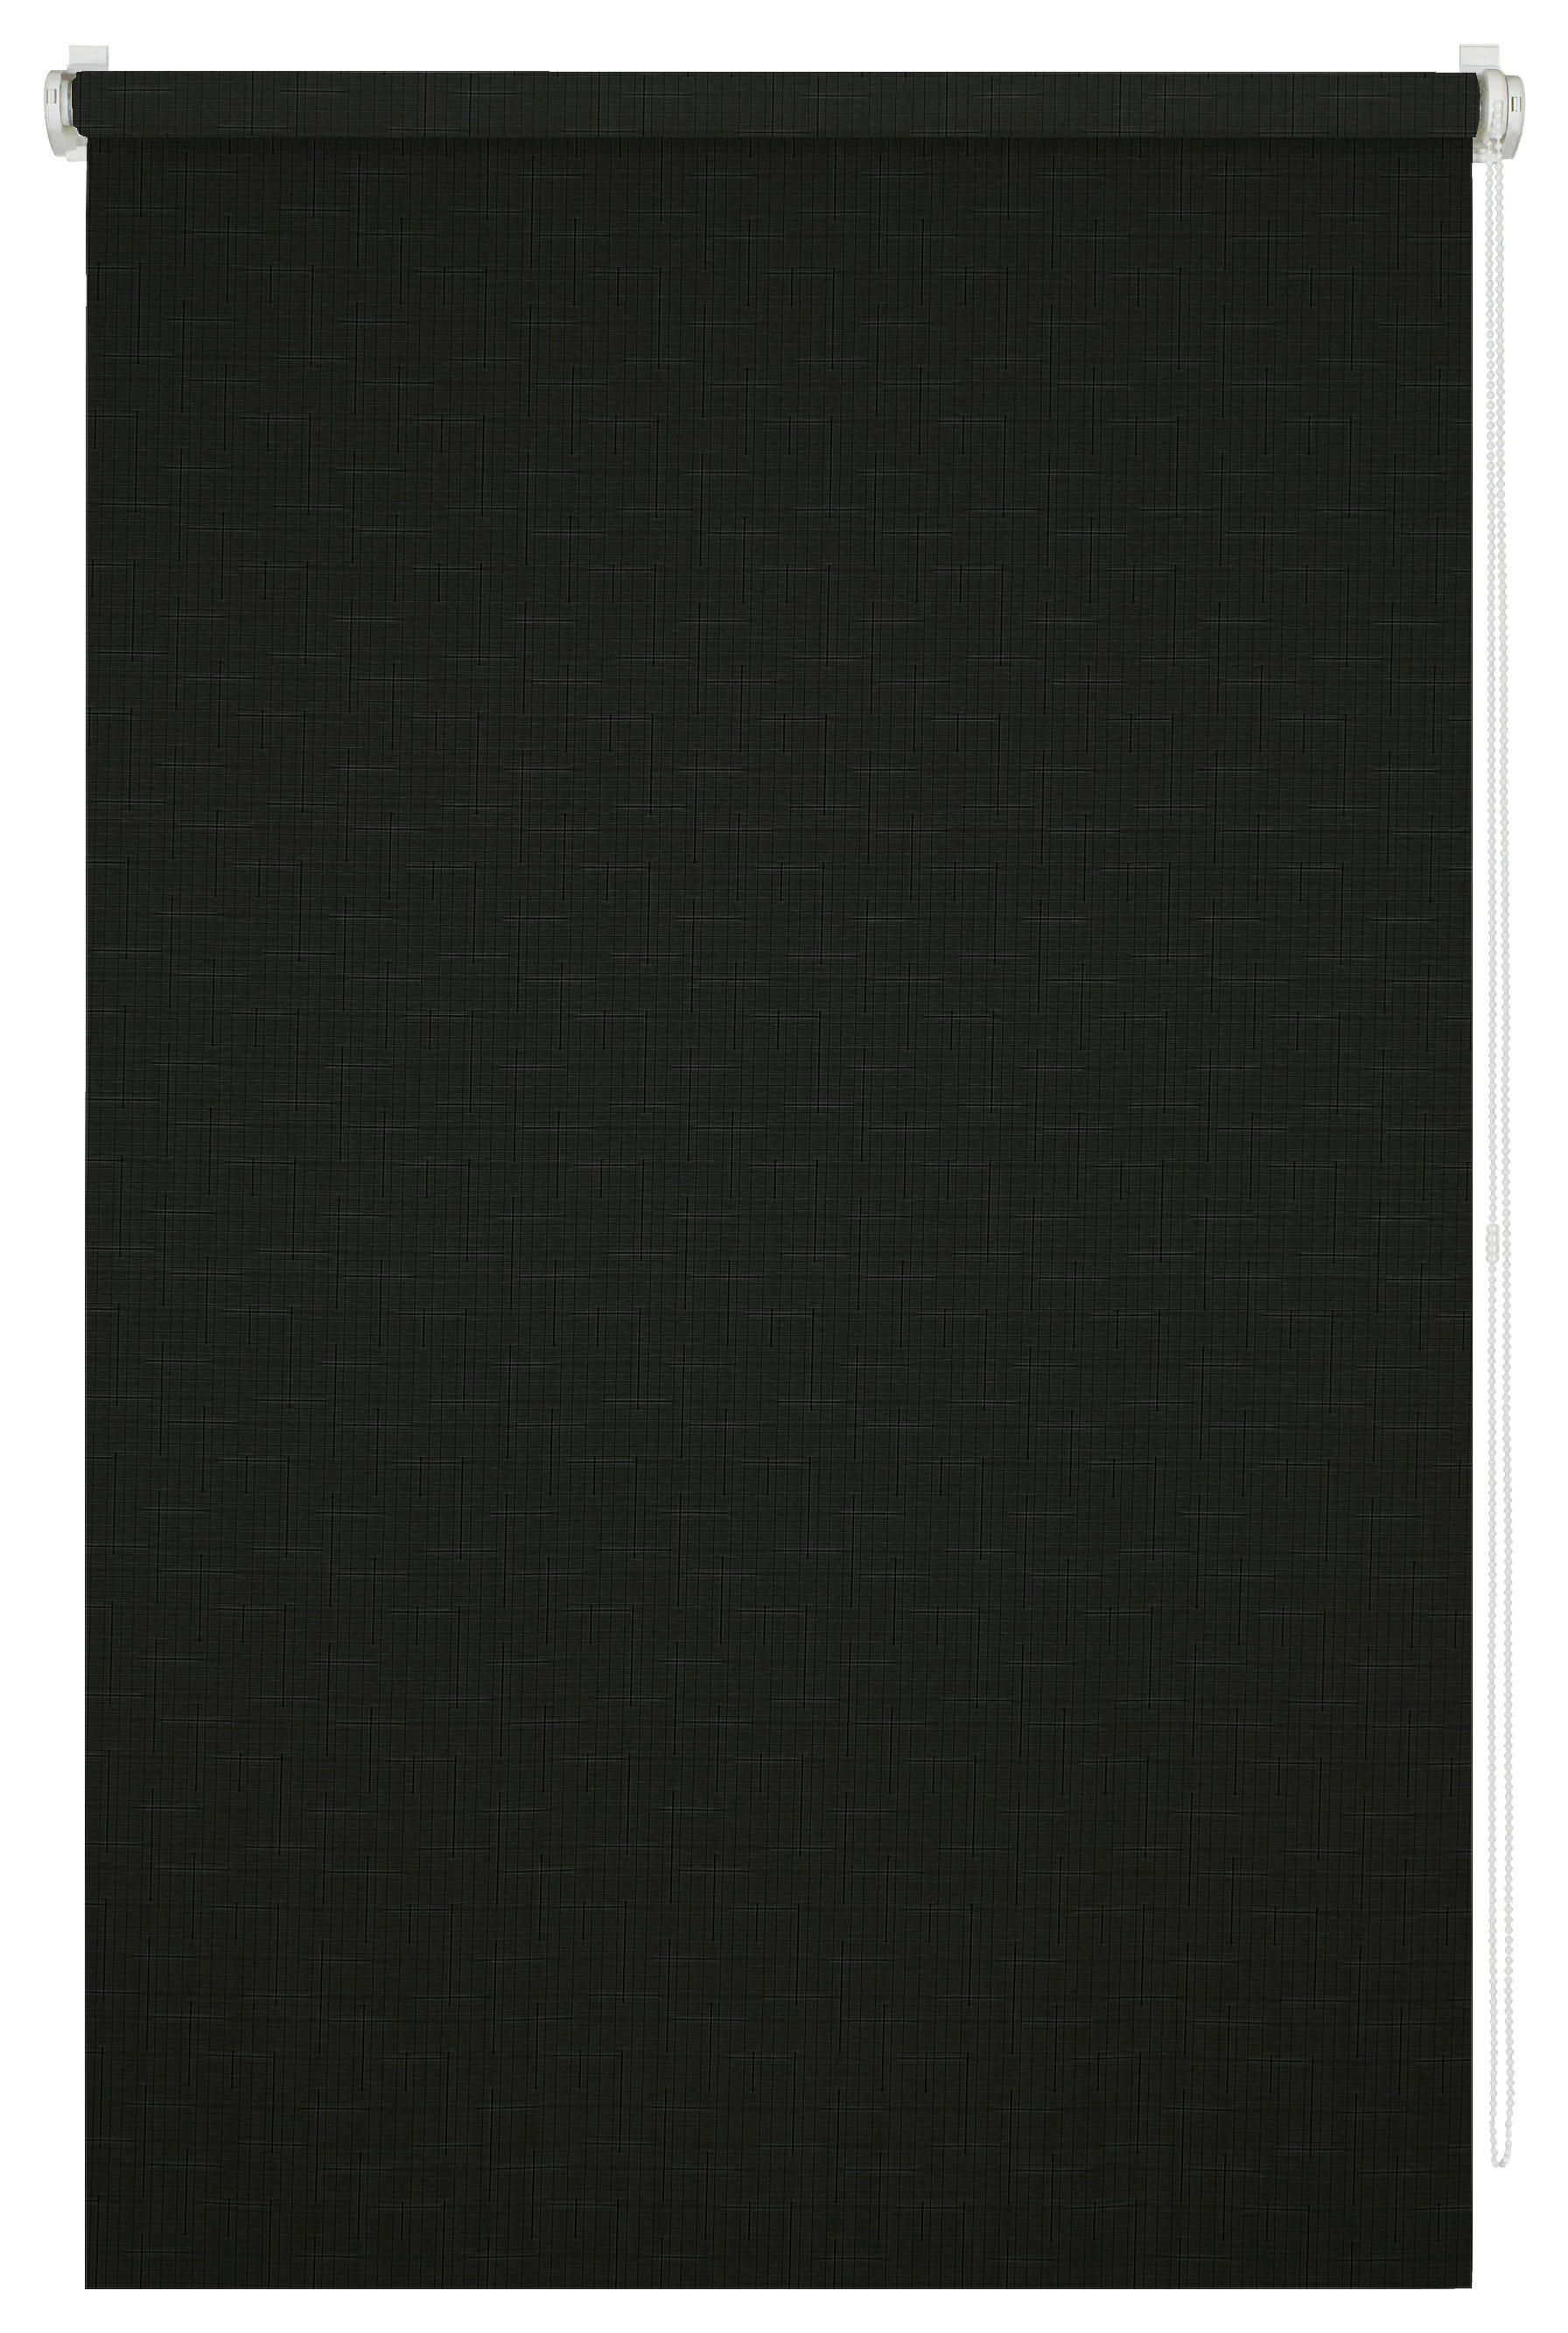 Rollo Struktur schwarz B/L: ca. 45x150 cm Struktur - schwarz (45,00/150,00cm) - Boviva